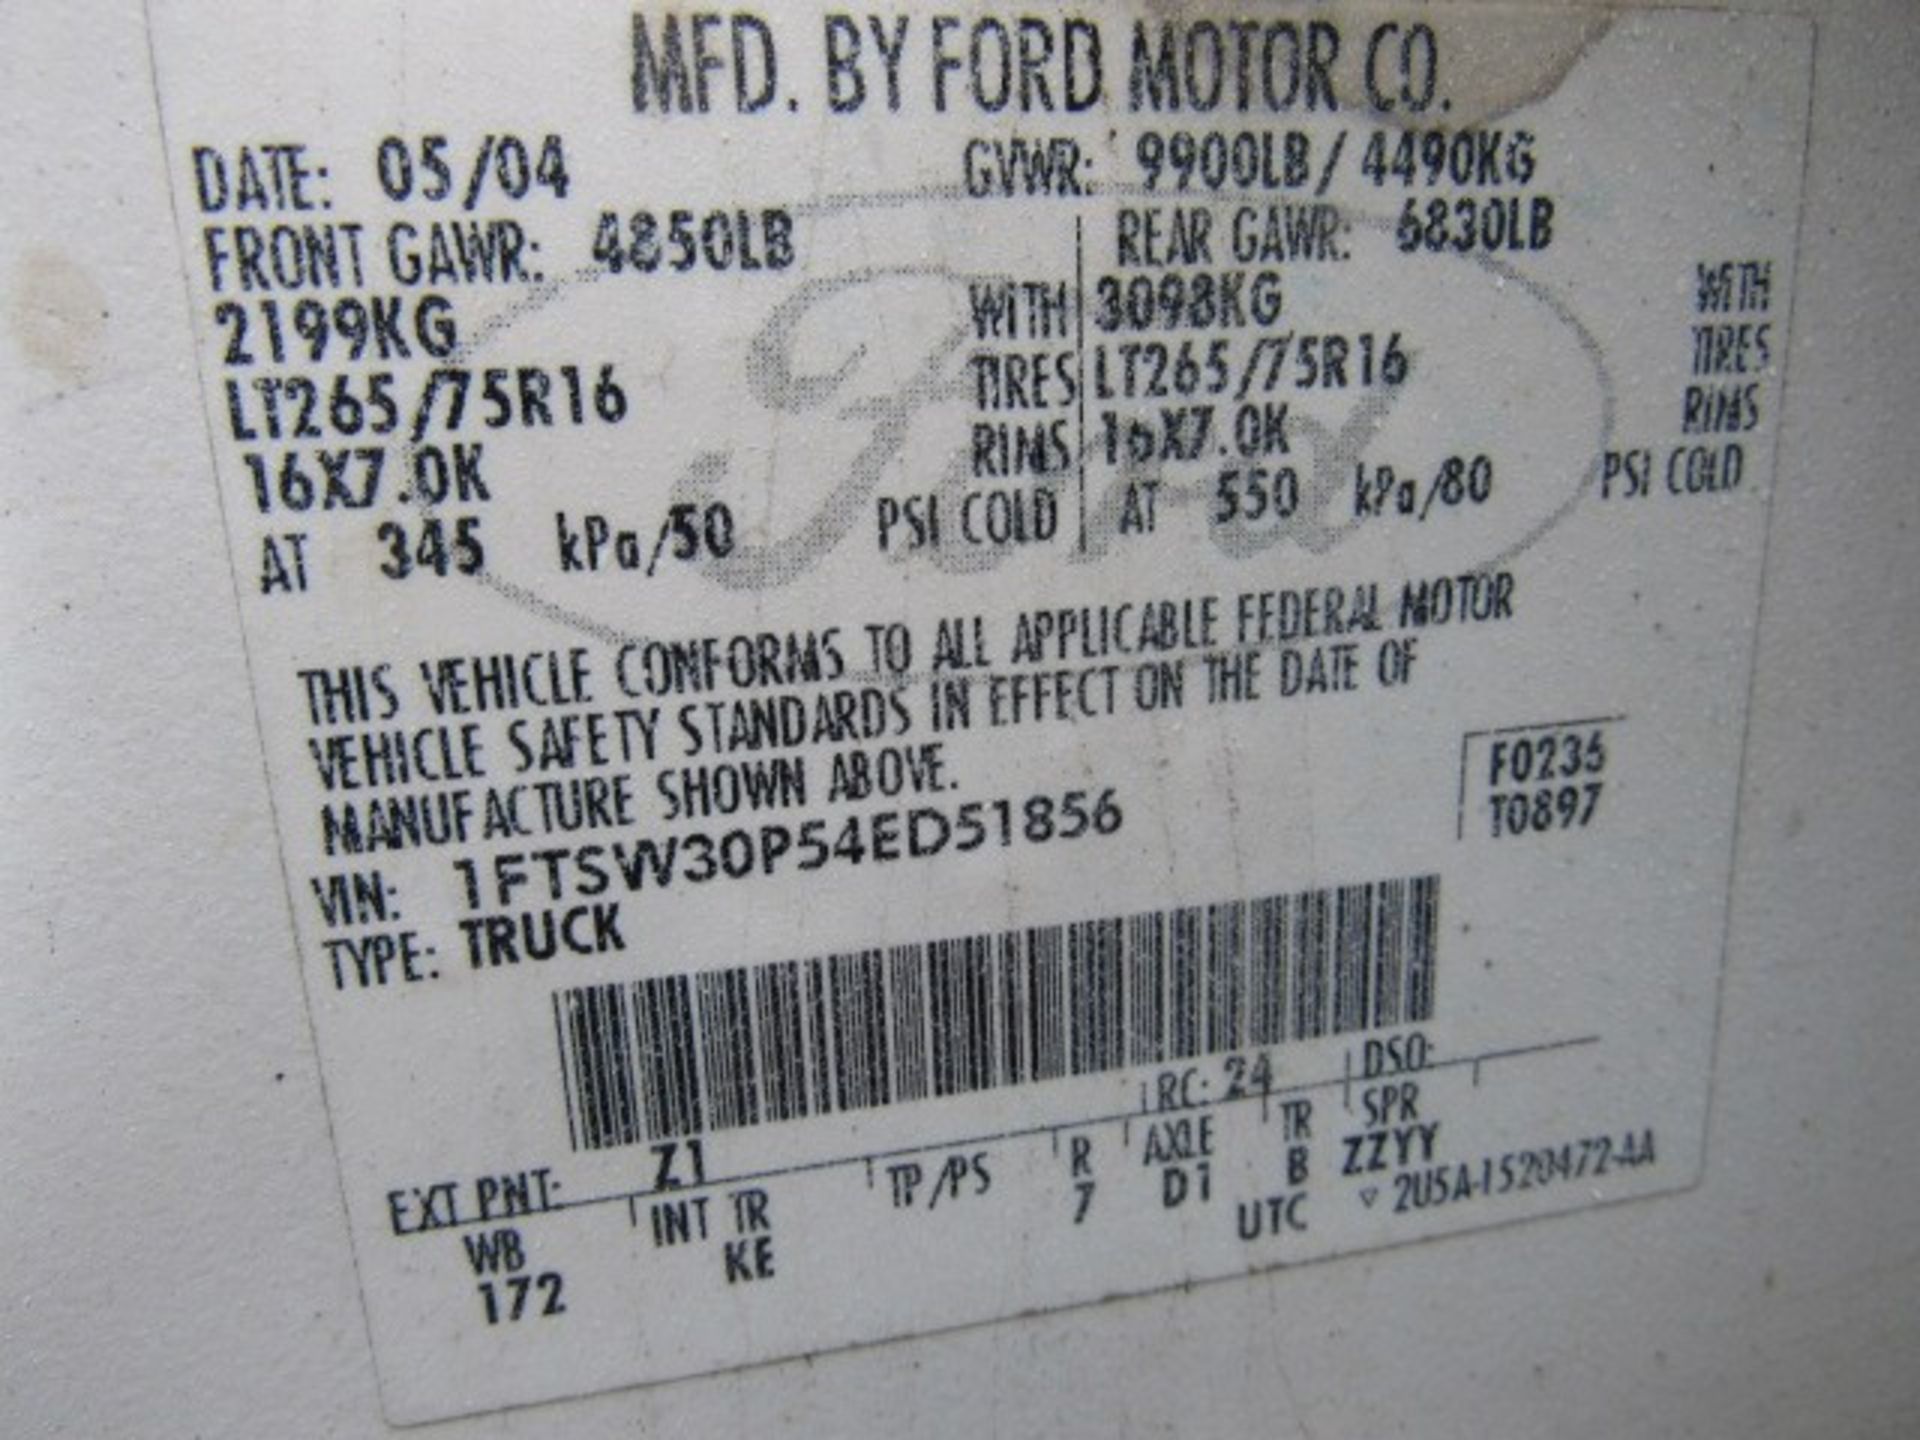 2004 Ford F350 11 ft. Flatbed XL Superduty 4 x 2, VIN # 1FTSW30P54ED51856, Crew Cab, Gooseneck - Image 7 of 7